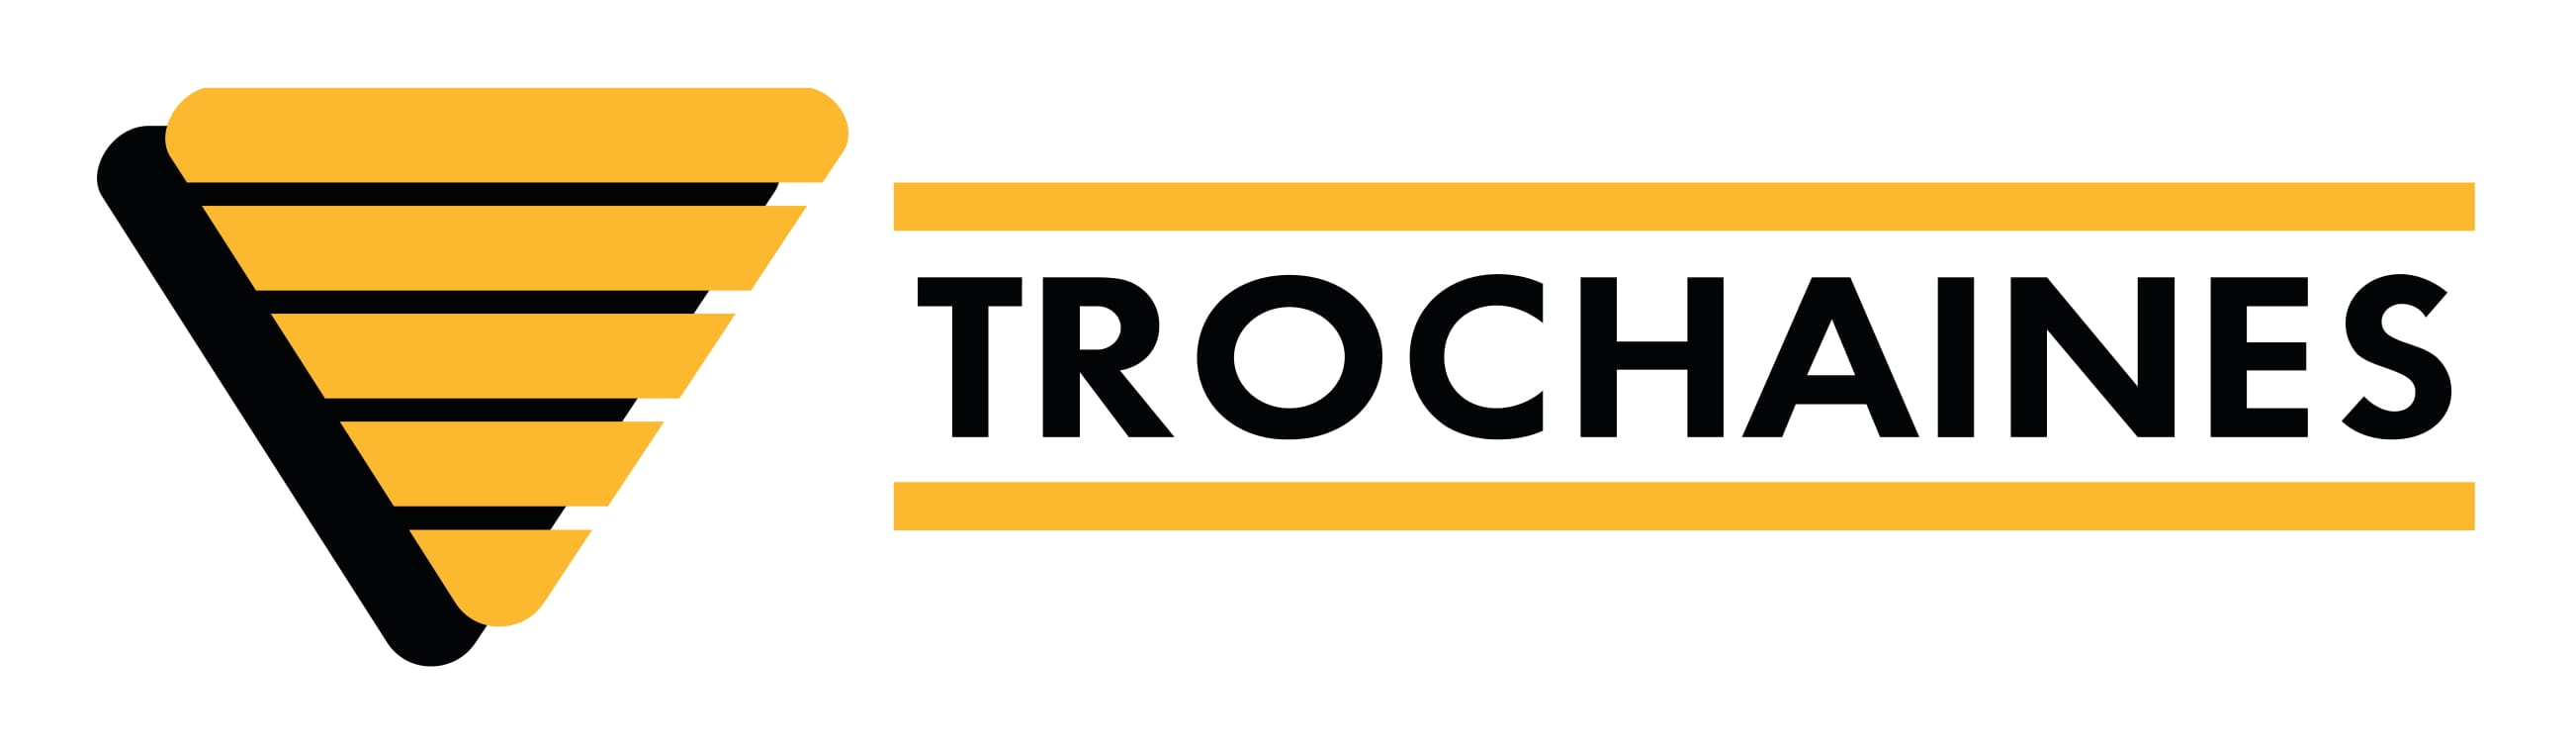 LLbotLgHneZ_Logo-Trochaines-1.jpg